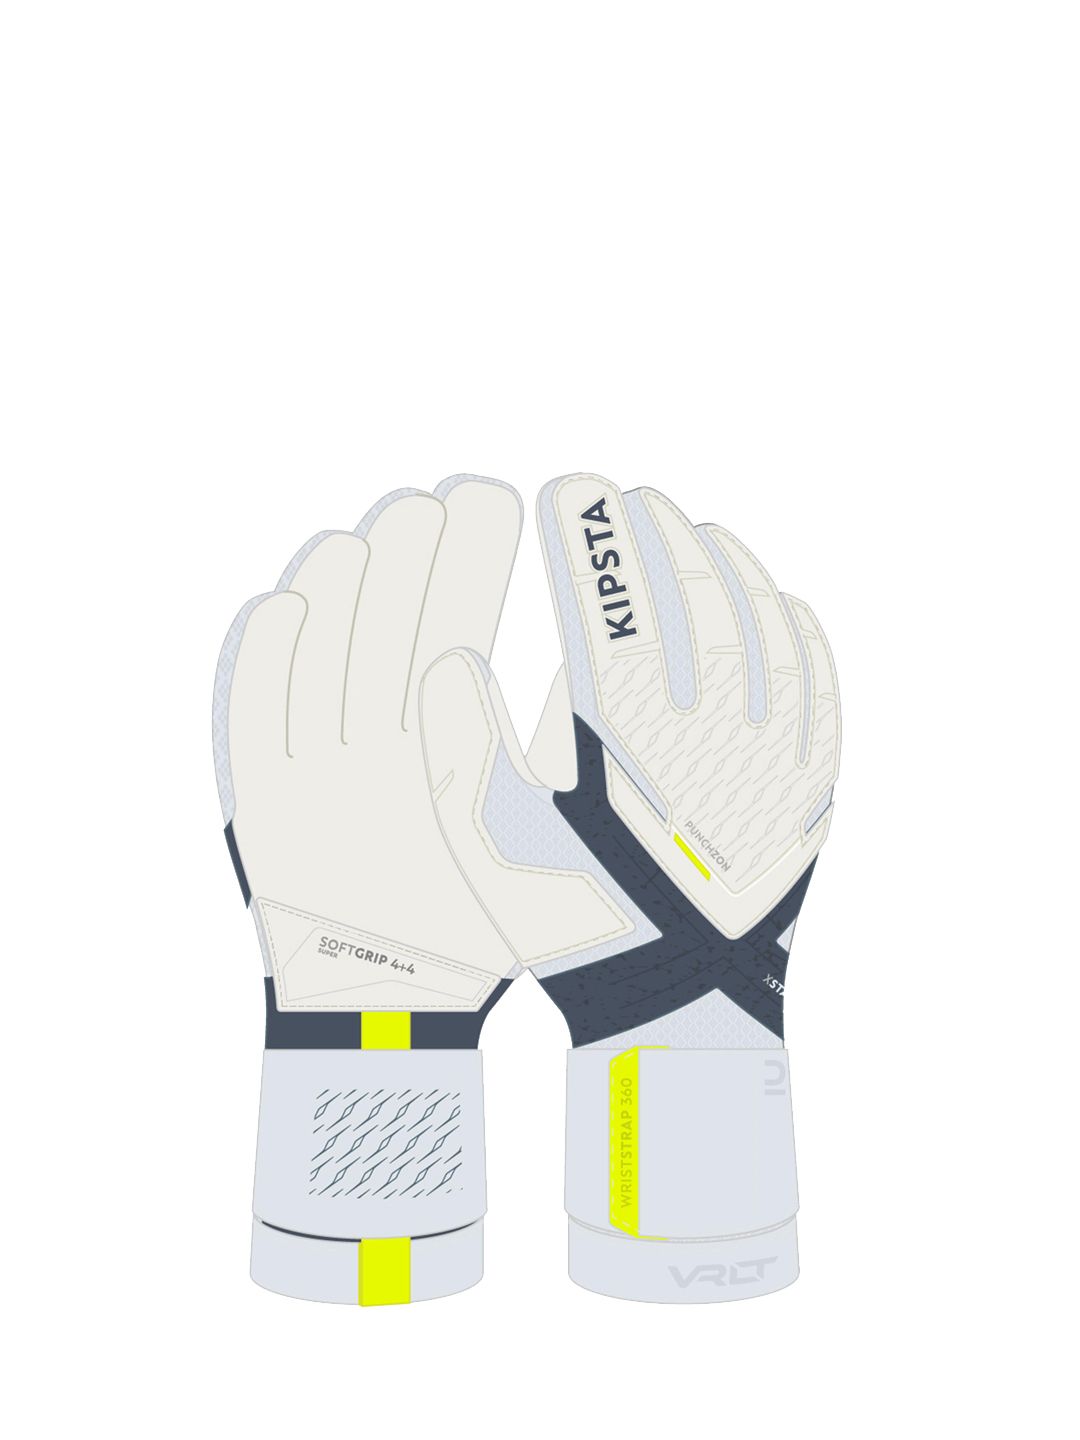 GKipsta By Decathlon Unisex White,Blue&Yellow Football Goalkeeper Gloves Price in India